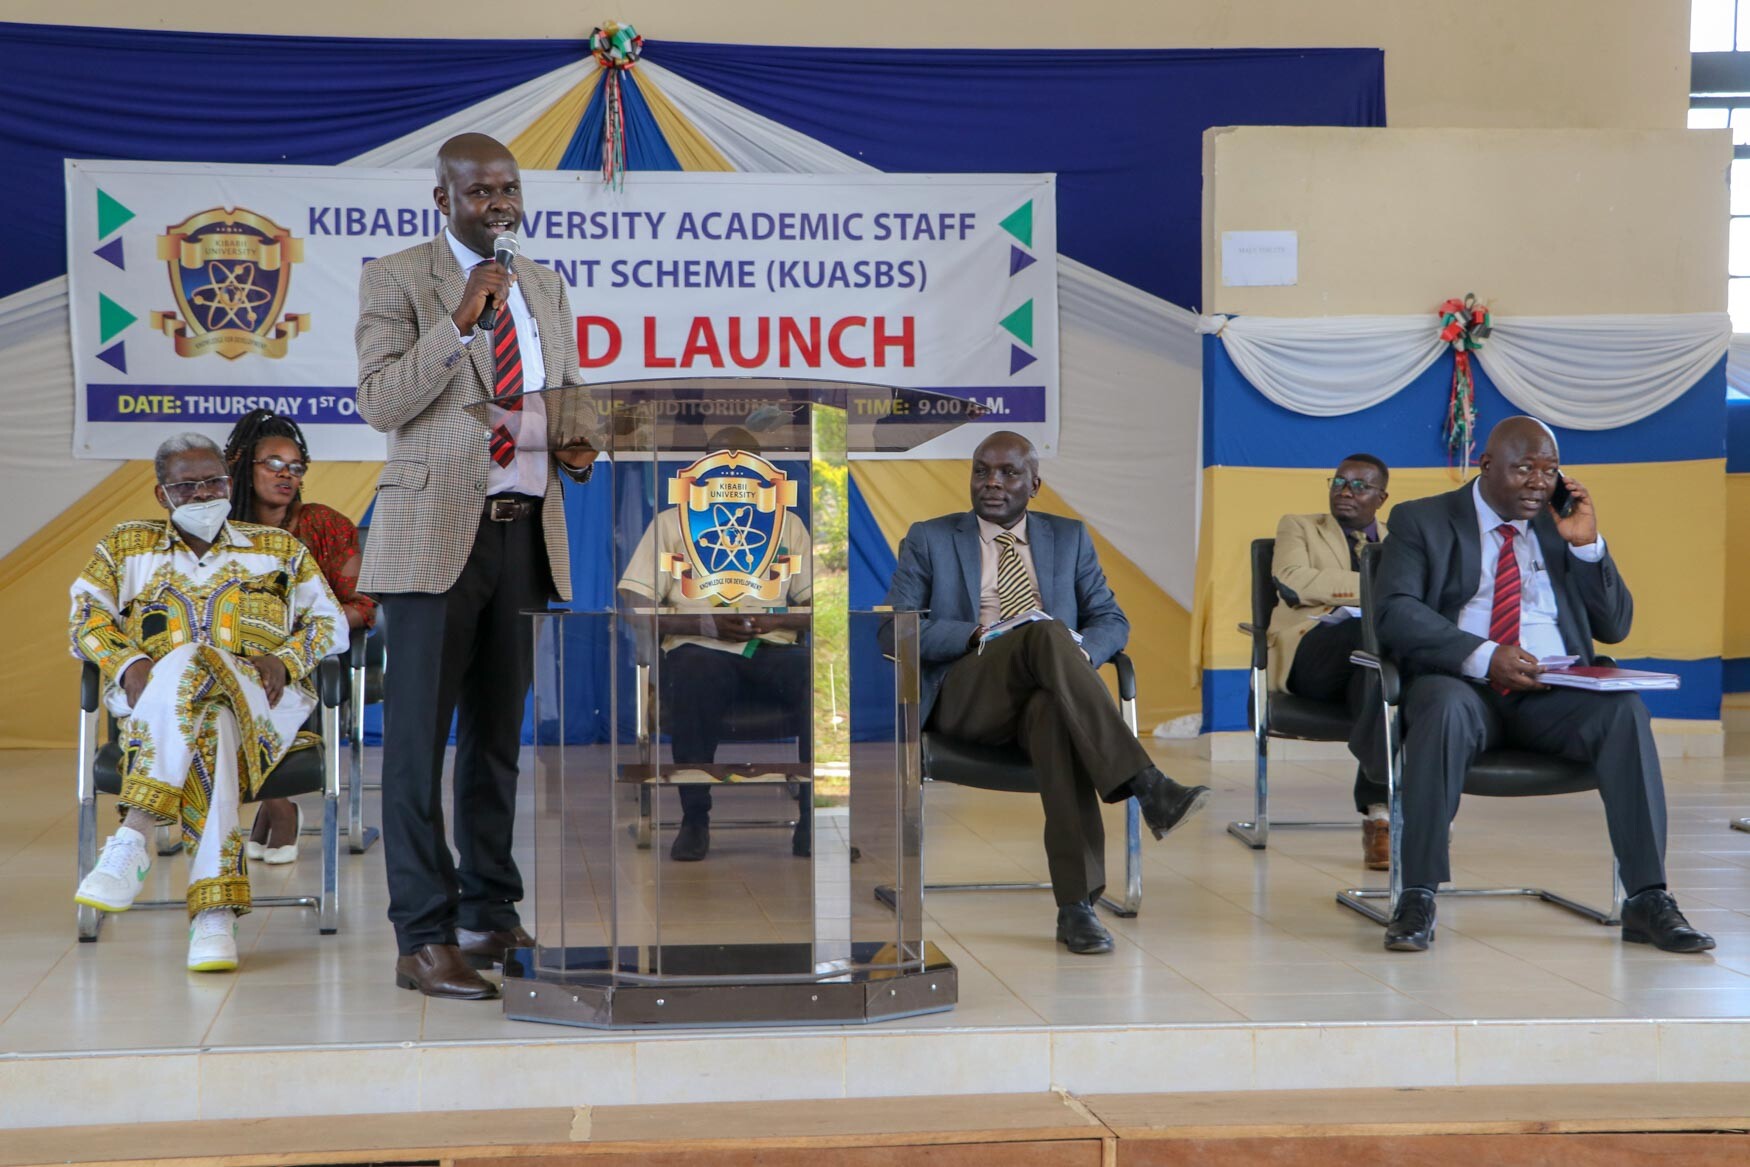 Academic Staff Benevolent Scheme (KUASBS) Grand Launch Album1